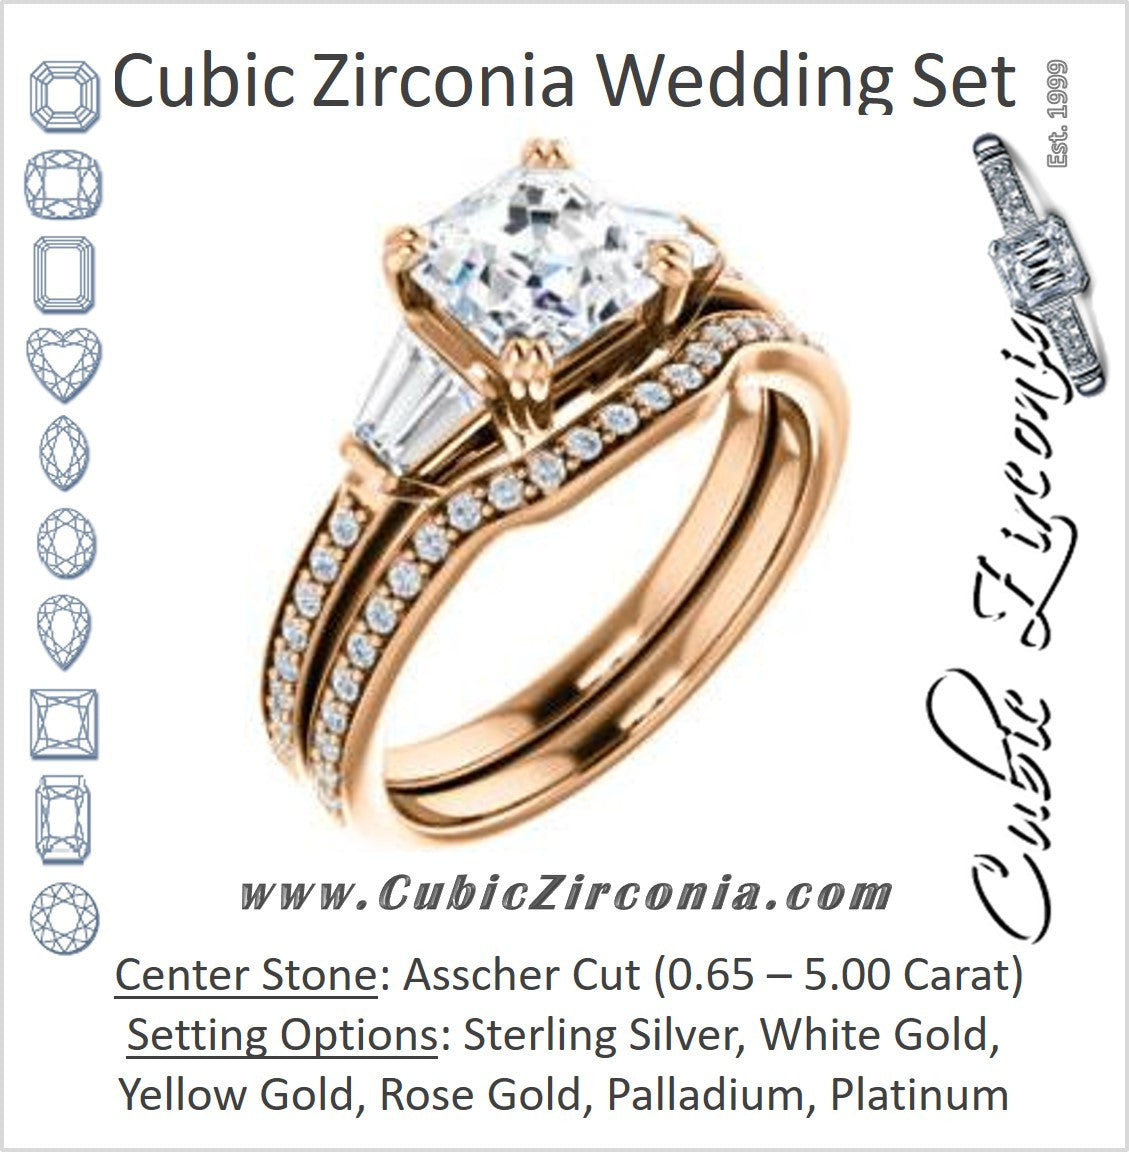 CZ Wedding Set, featuring The Hazel Rae engagement ring (Customizable Asscher Cut Design with Quad Baguette Accents and Pavé Band)